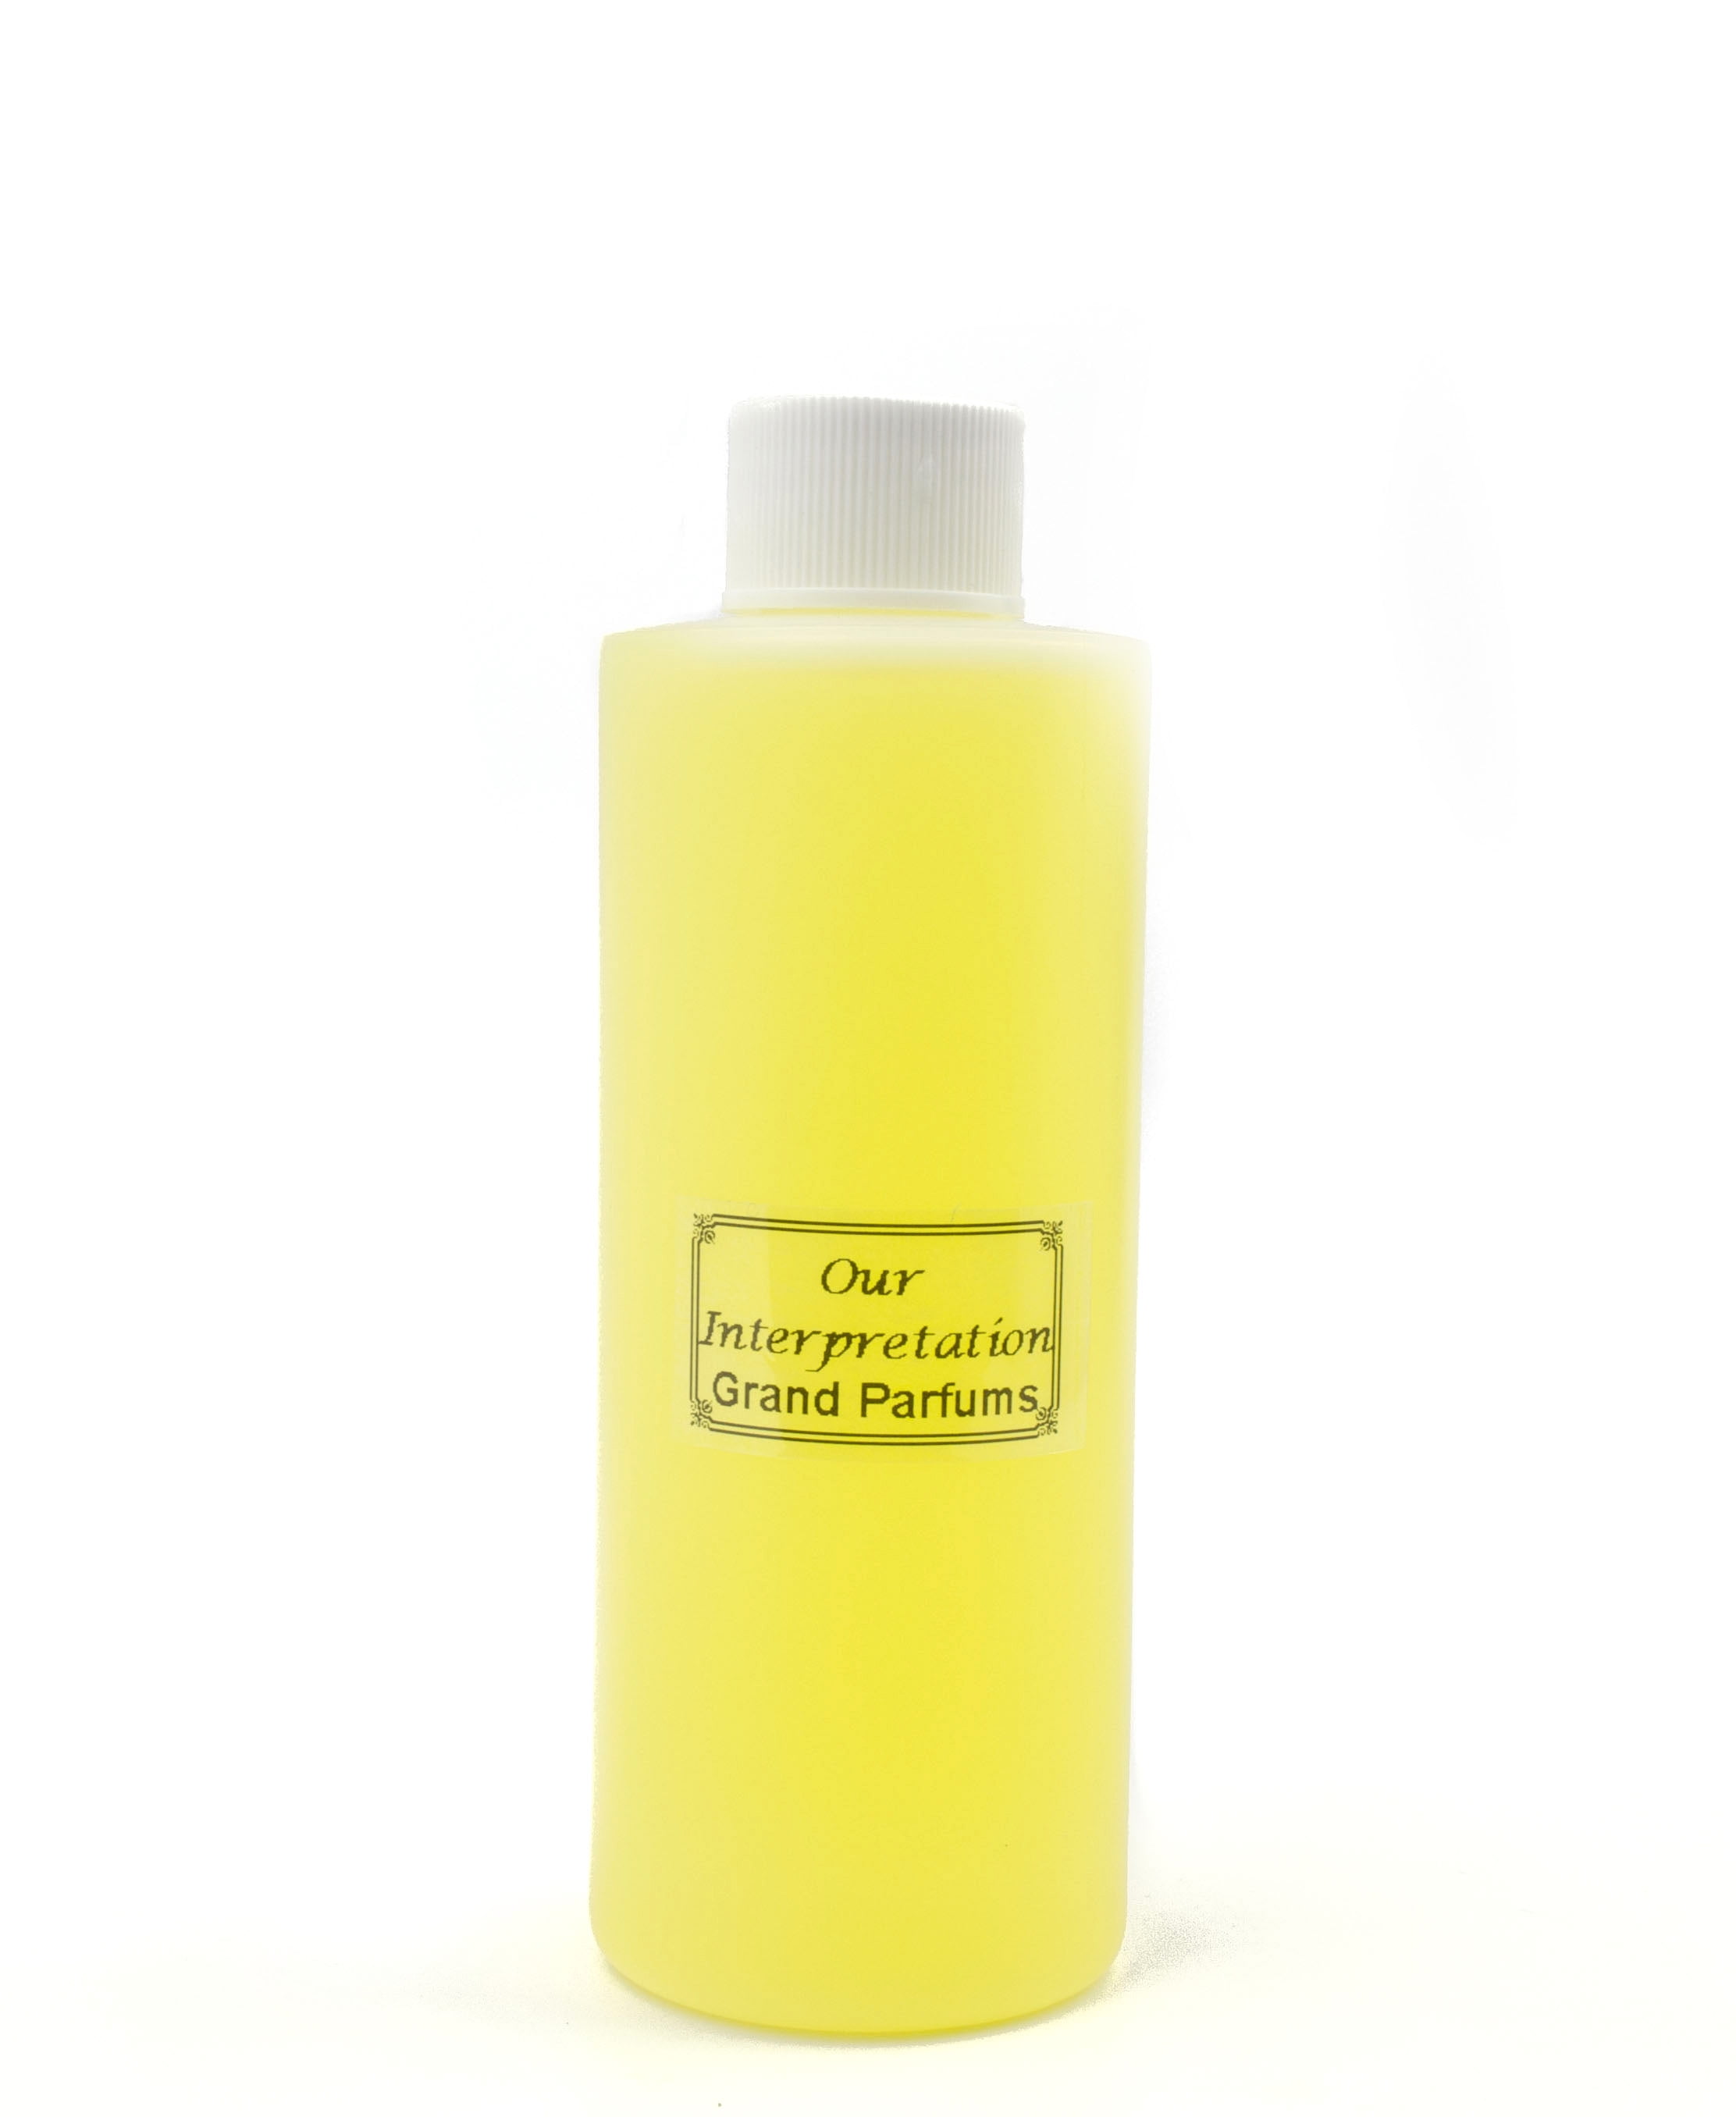 dior sauvage fragrance oil